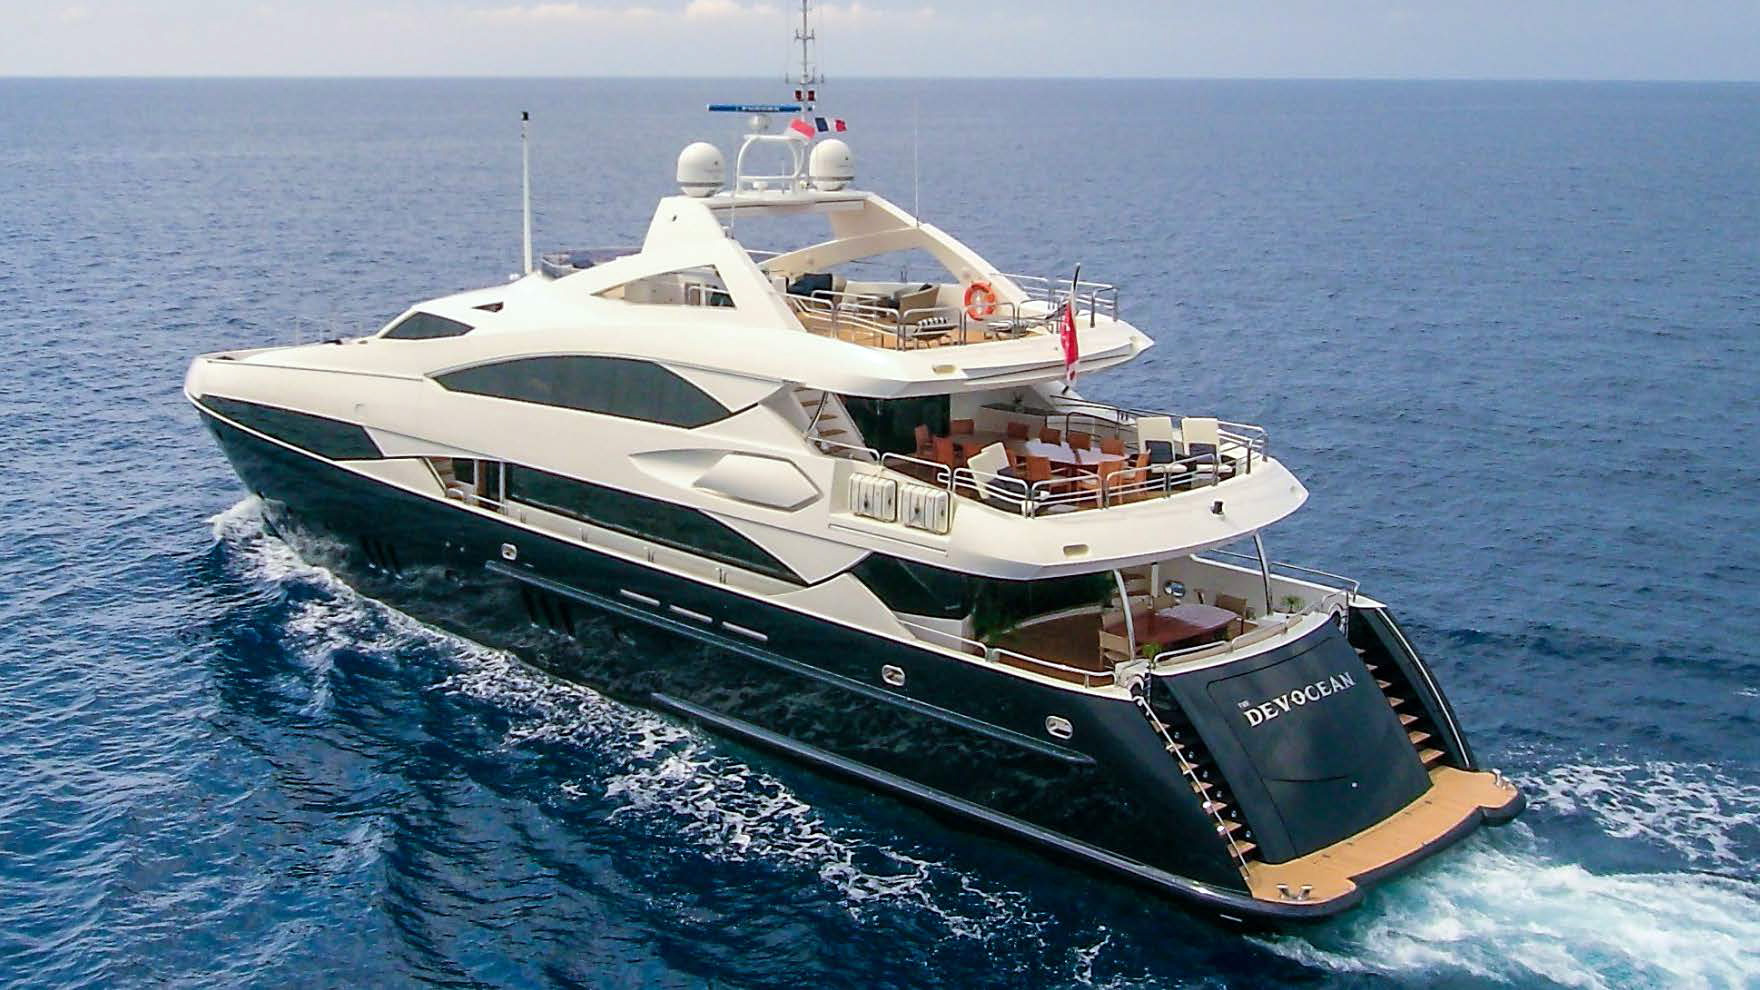 who owns devocean yacht